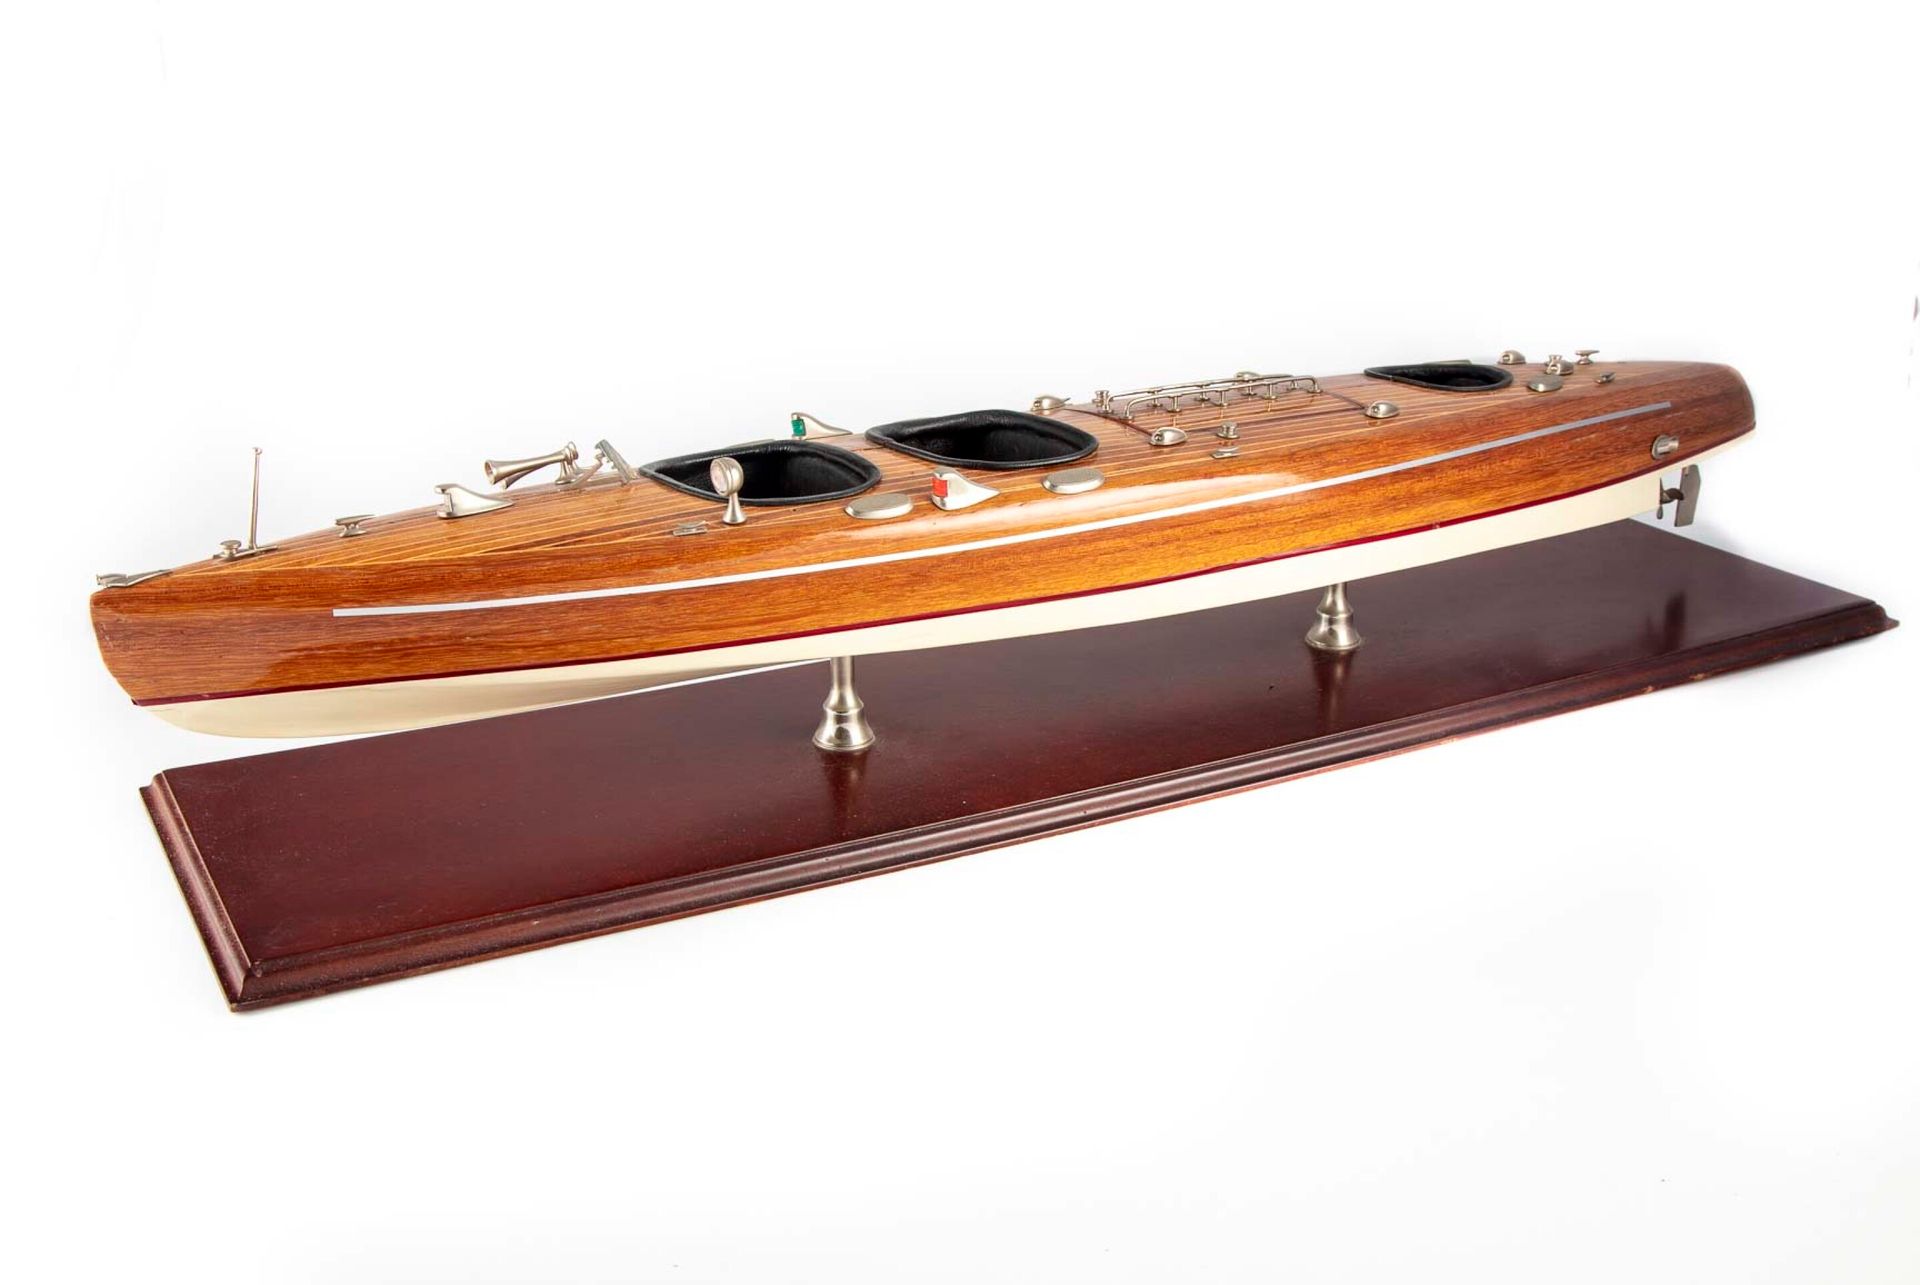 Null 木头和金属制成的大型快艇模型

以其为基础

H.14 cm; W. 79 cm; D. 15,5 cm

事故